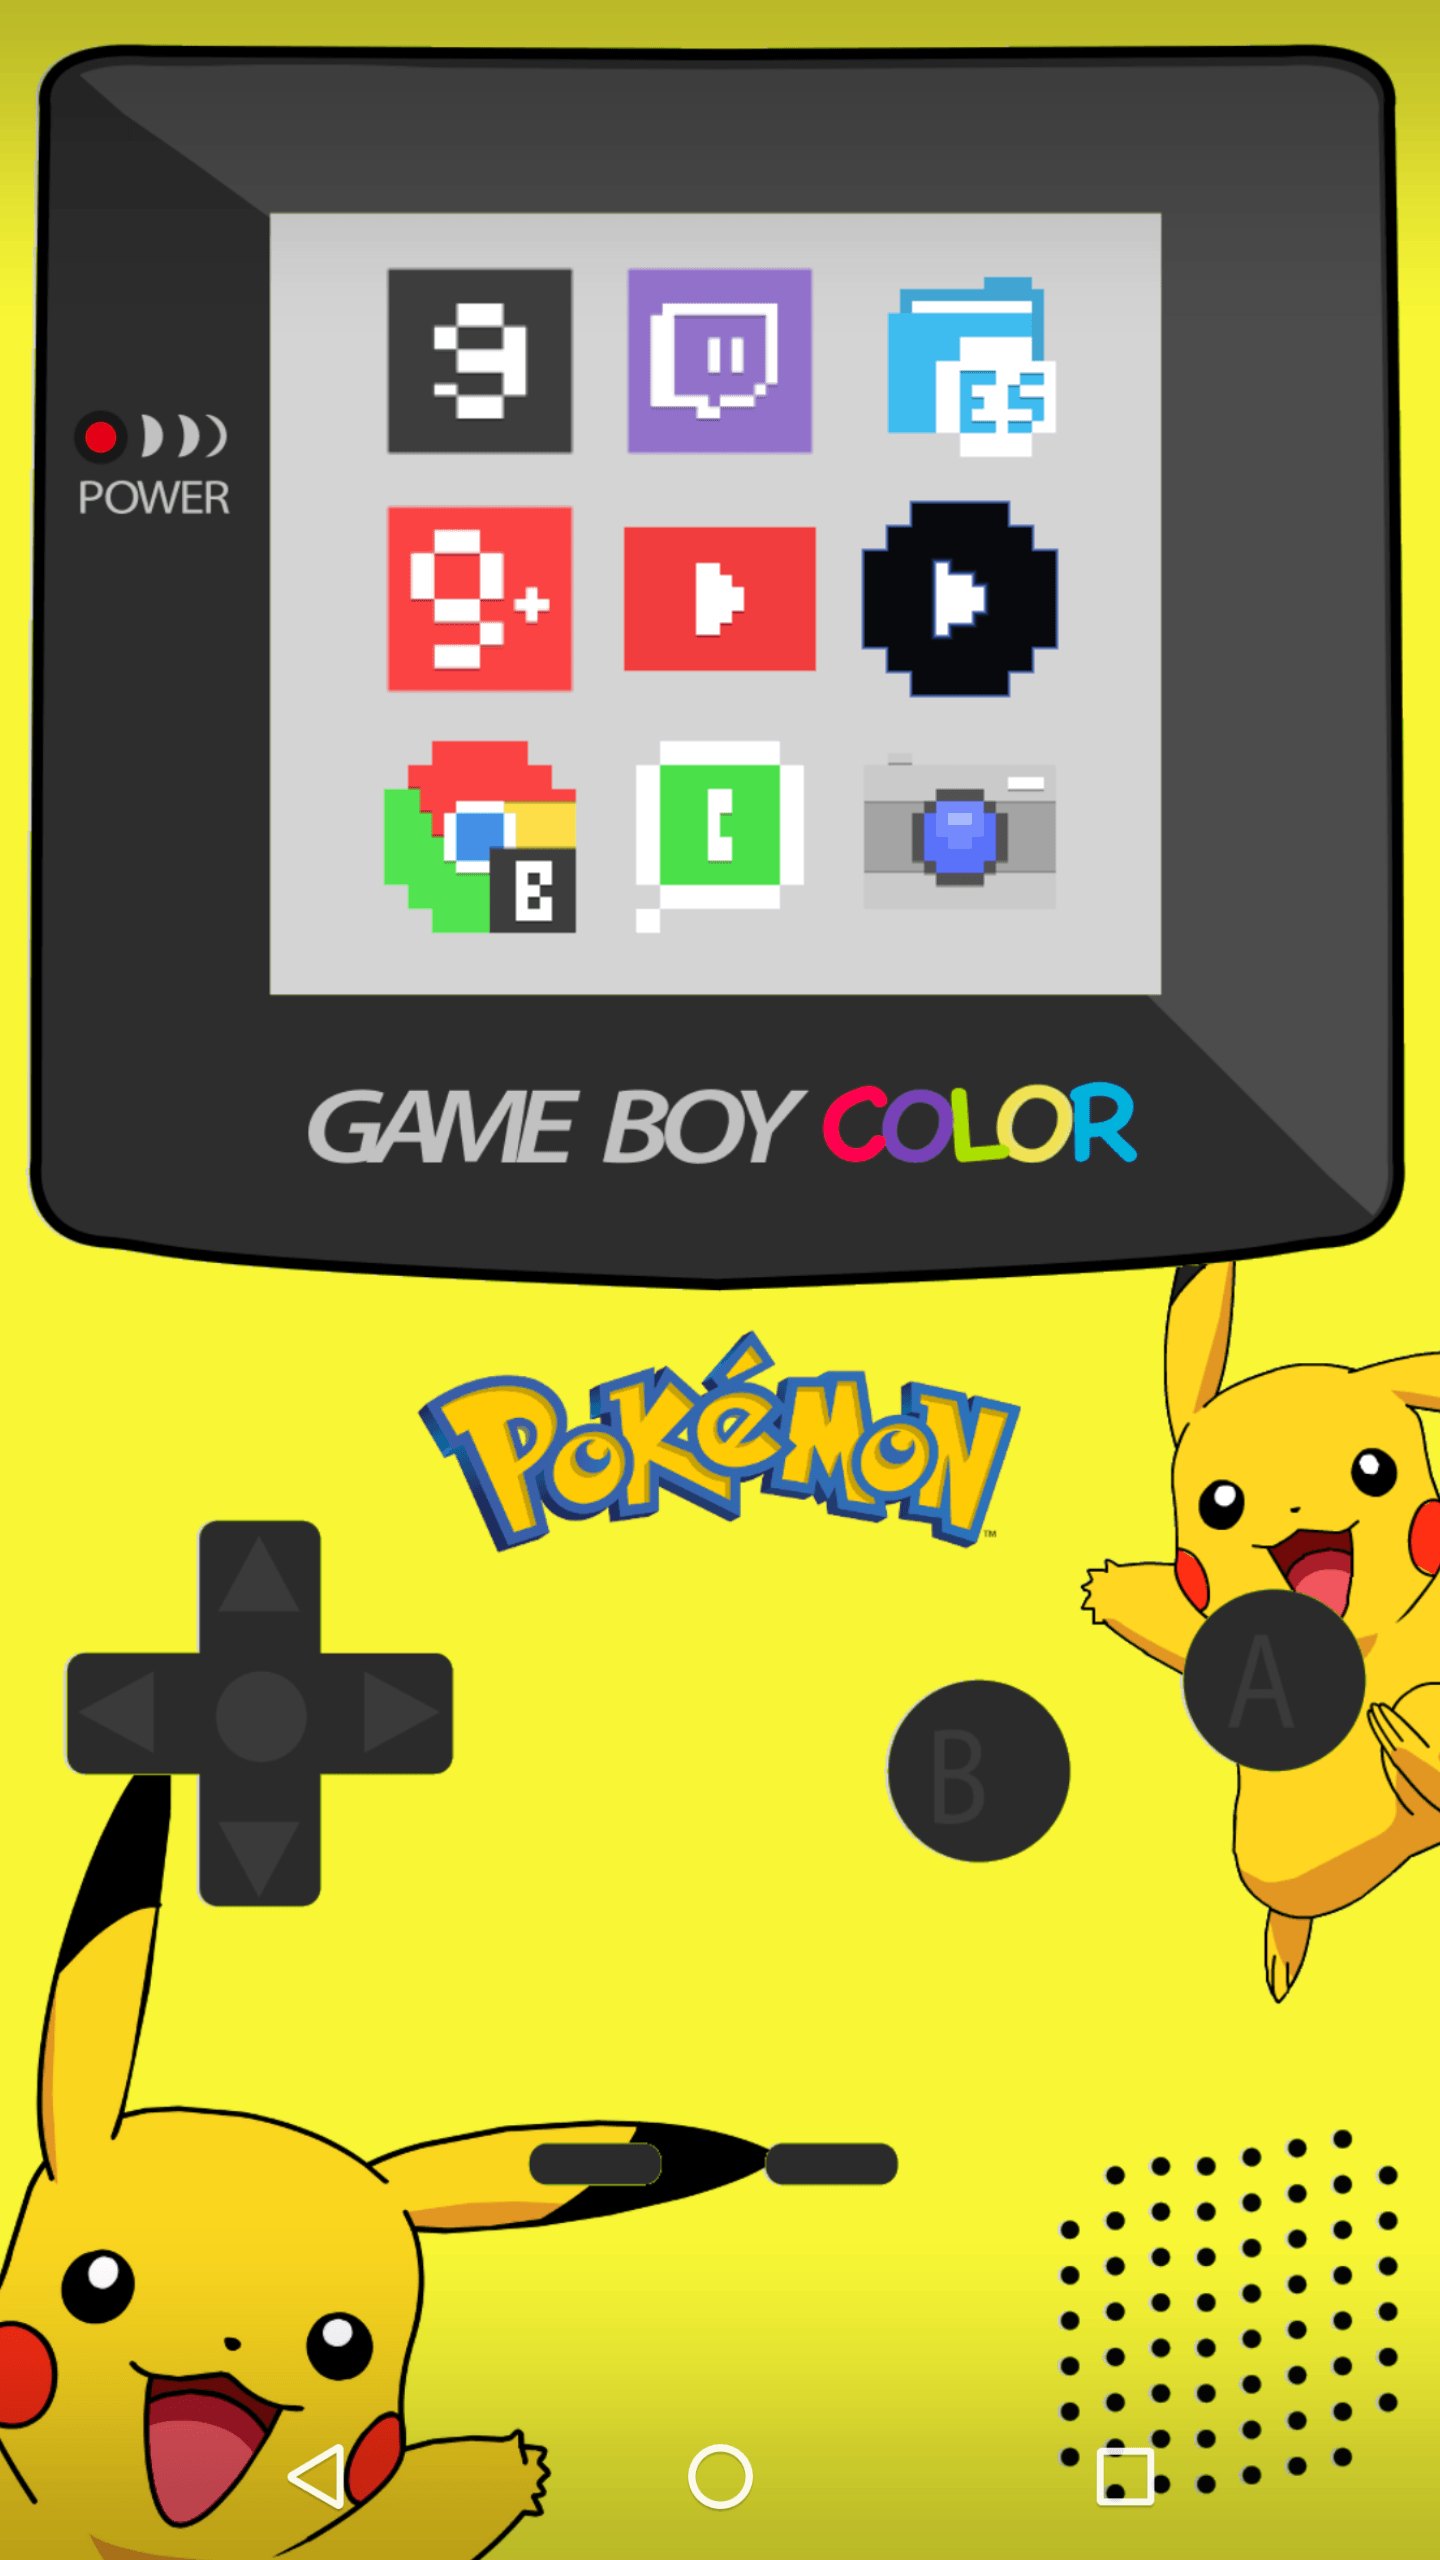 Pokémon 20th anniversary Android Wallpaper